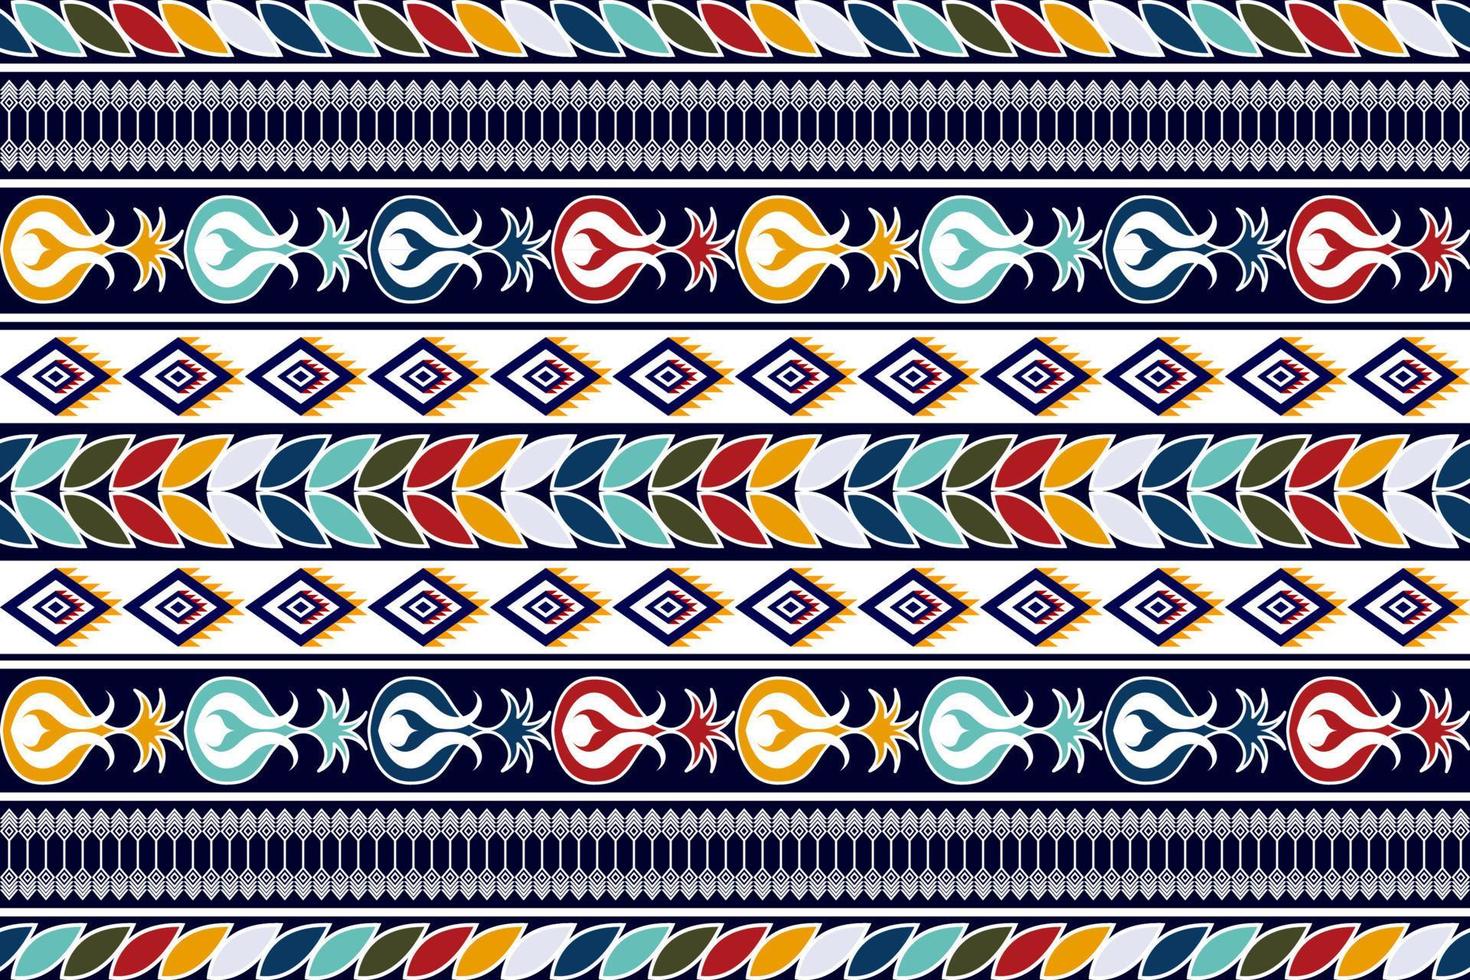 Ikat ethnic seamless textile pattern design. Aztec fabric carpet mandala ornaments textile decorations wallpaper. Tribal boho native turkey traditional embroidery vector background.